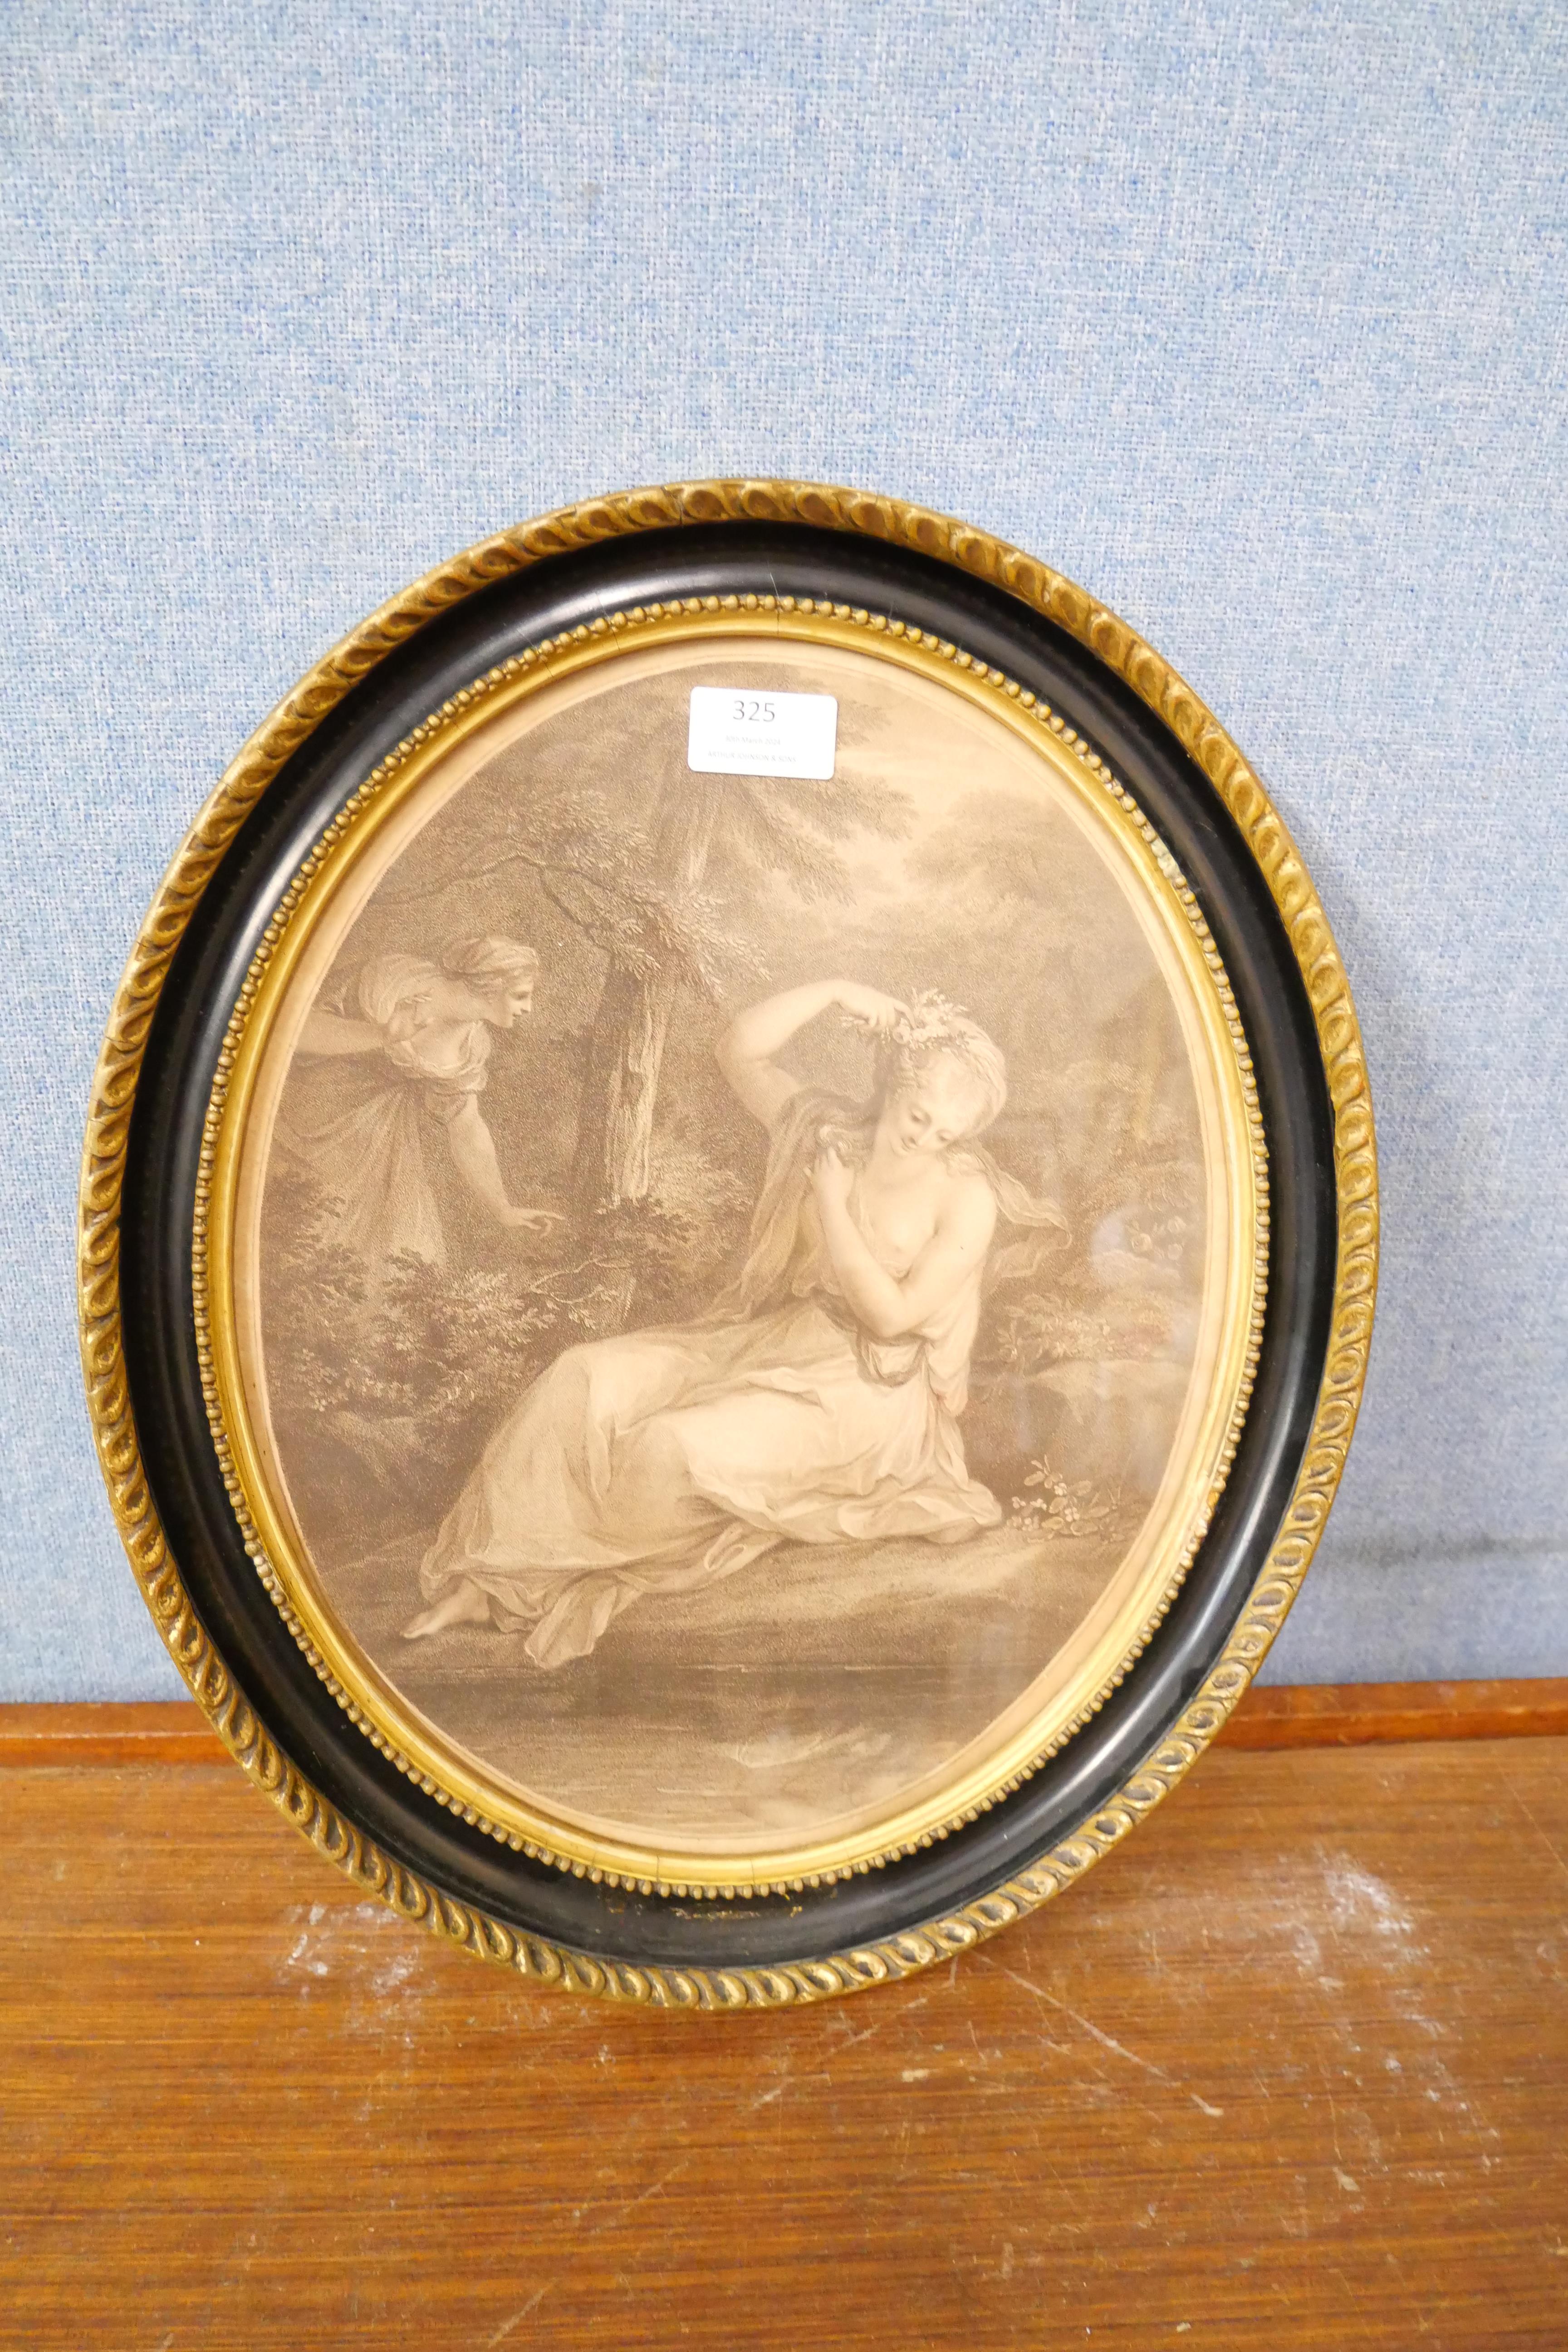 An 18th Century Francesco Bartolozzi engraving, oval portrait of a lady, framed